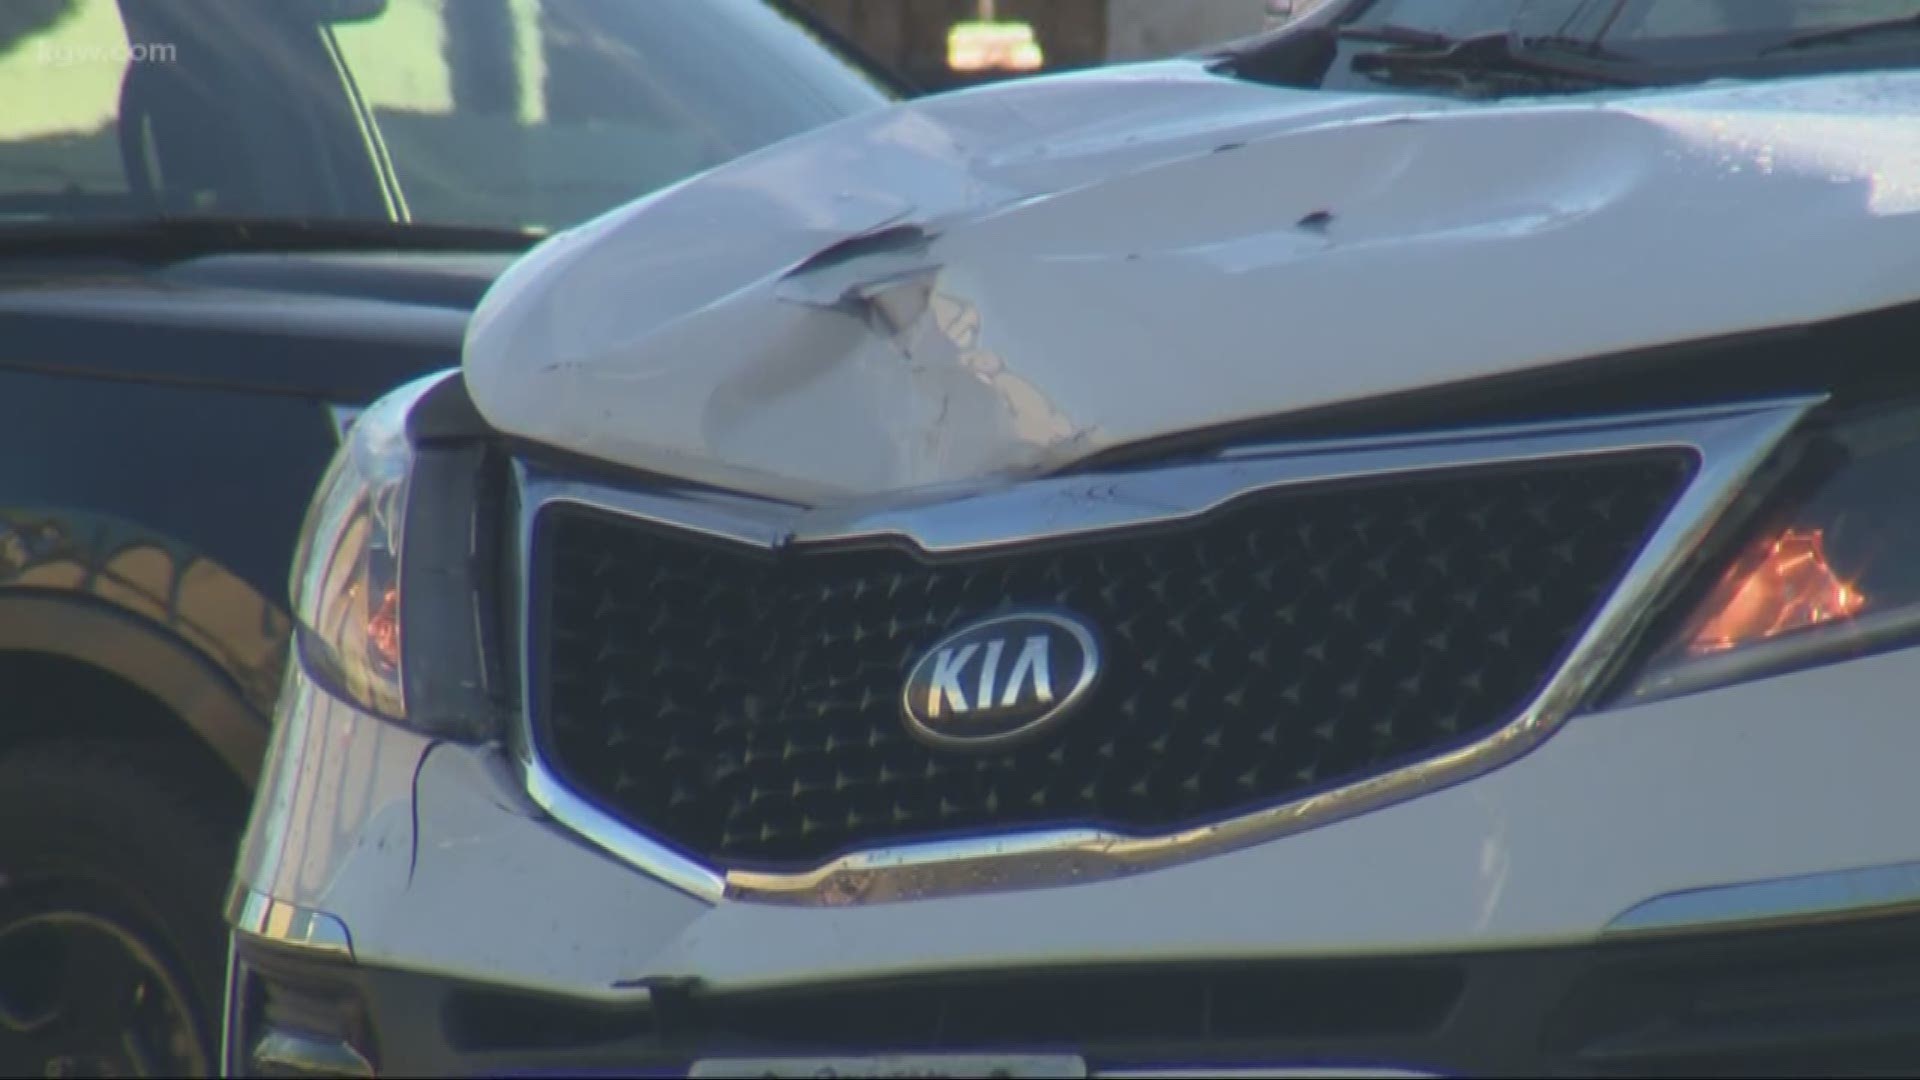 Driver hits, kills pedestrian in SE Portland